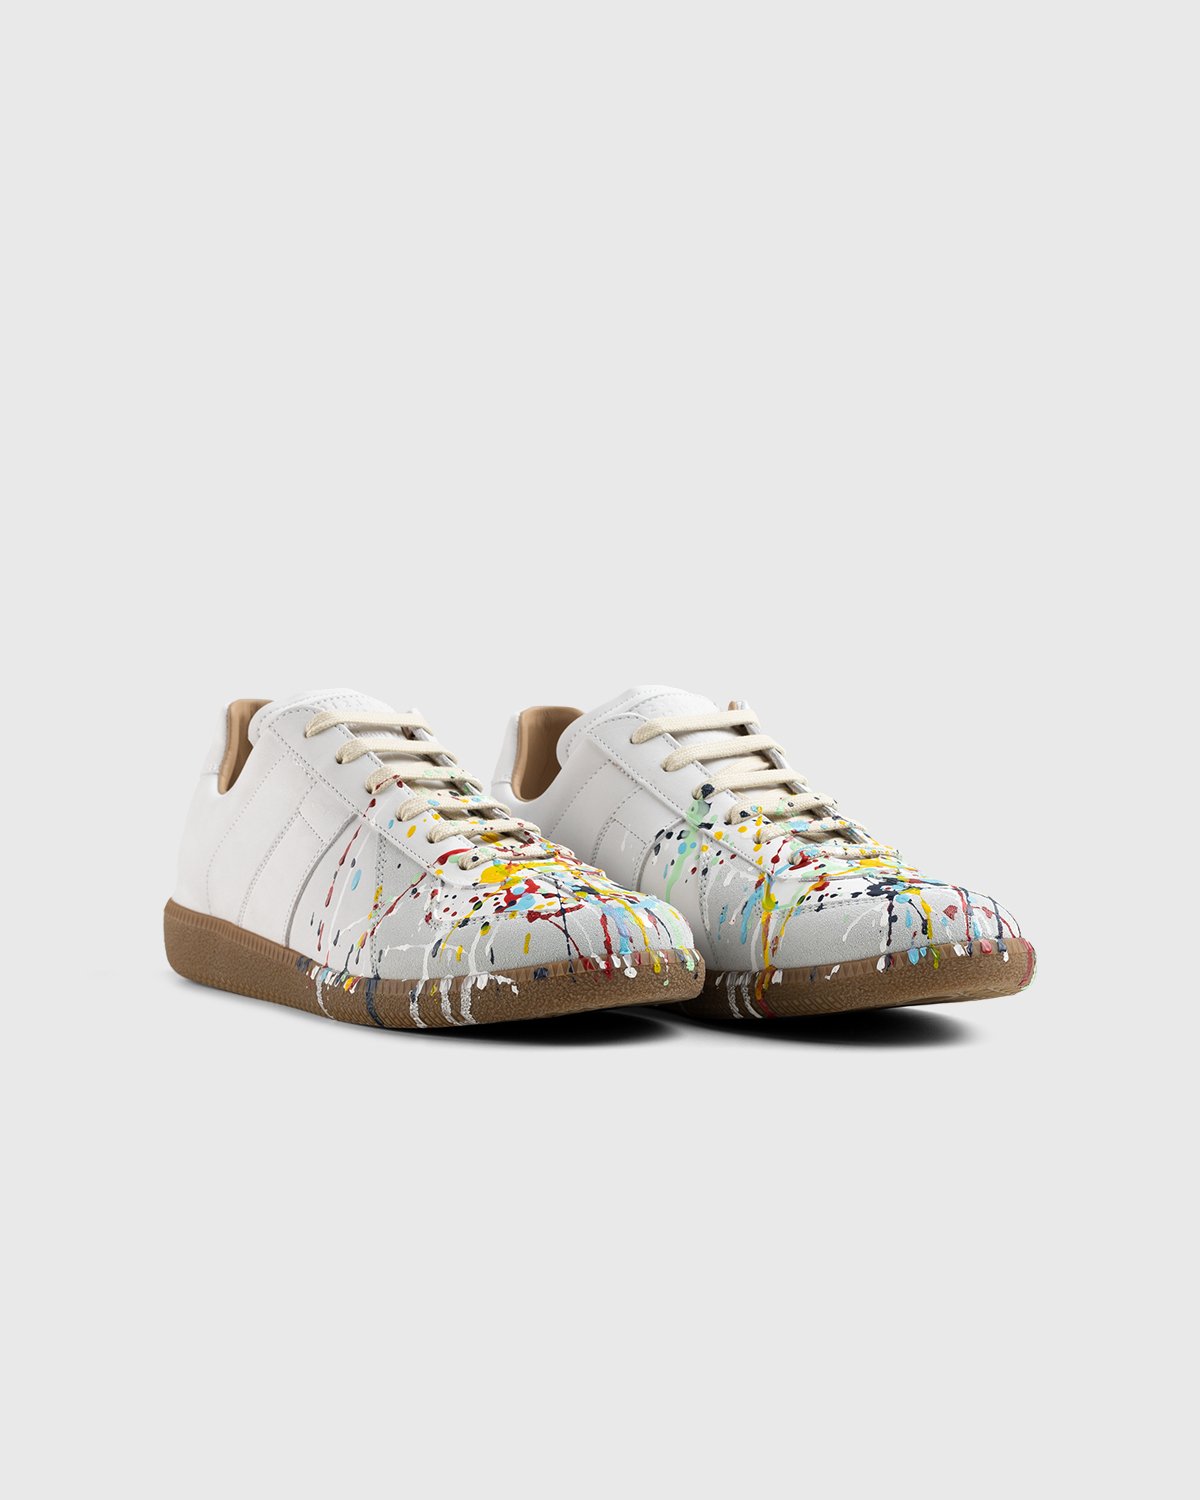 Maison Margiela – Replica Paint Drop Sneakers White | Highsnobiety Shop